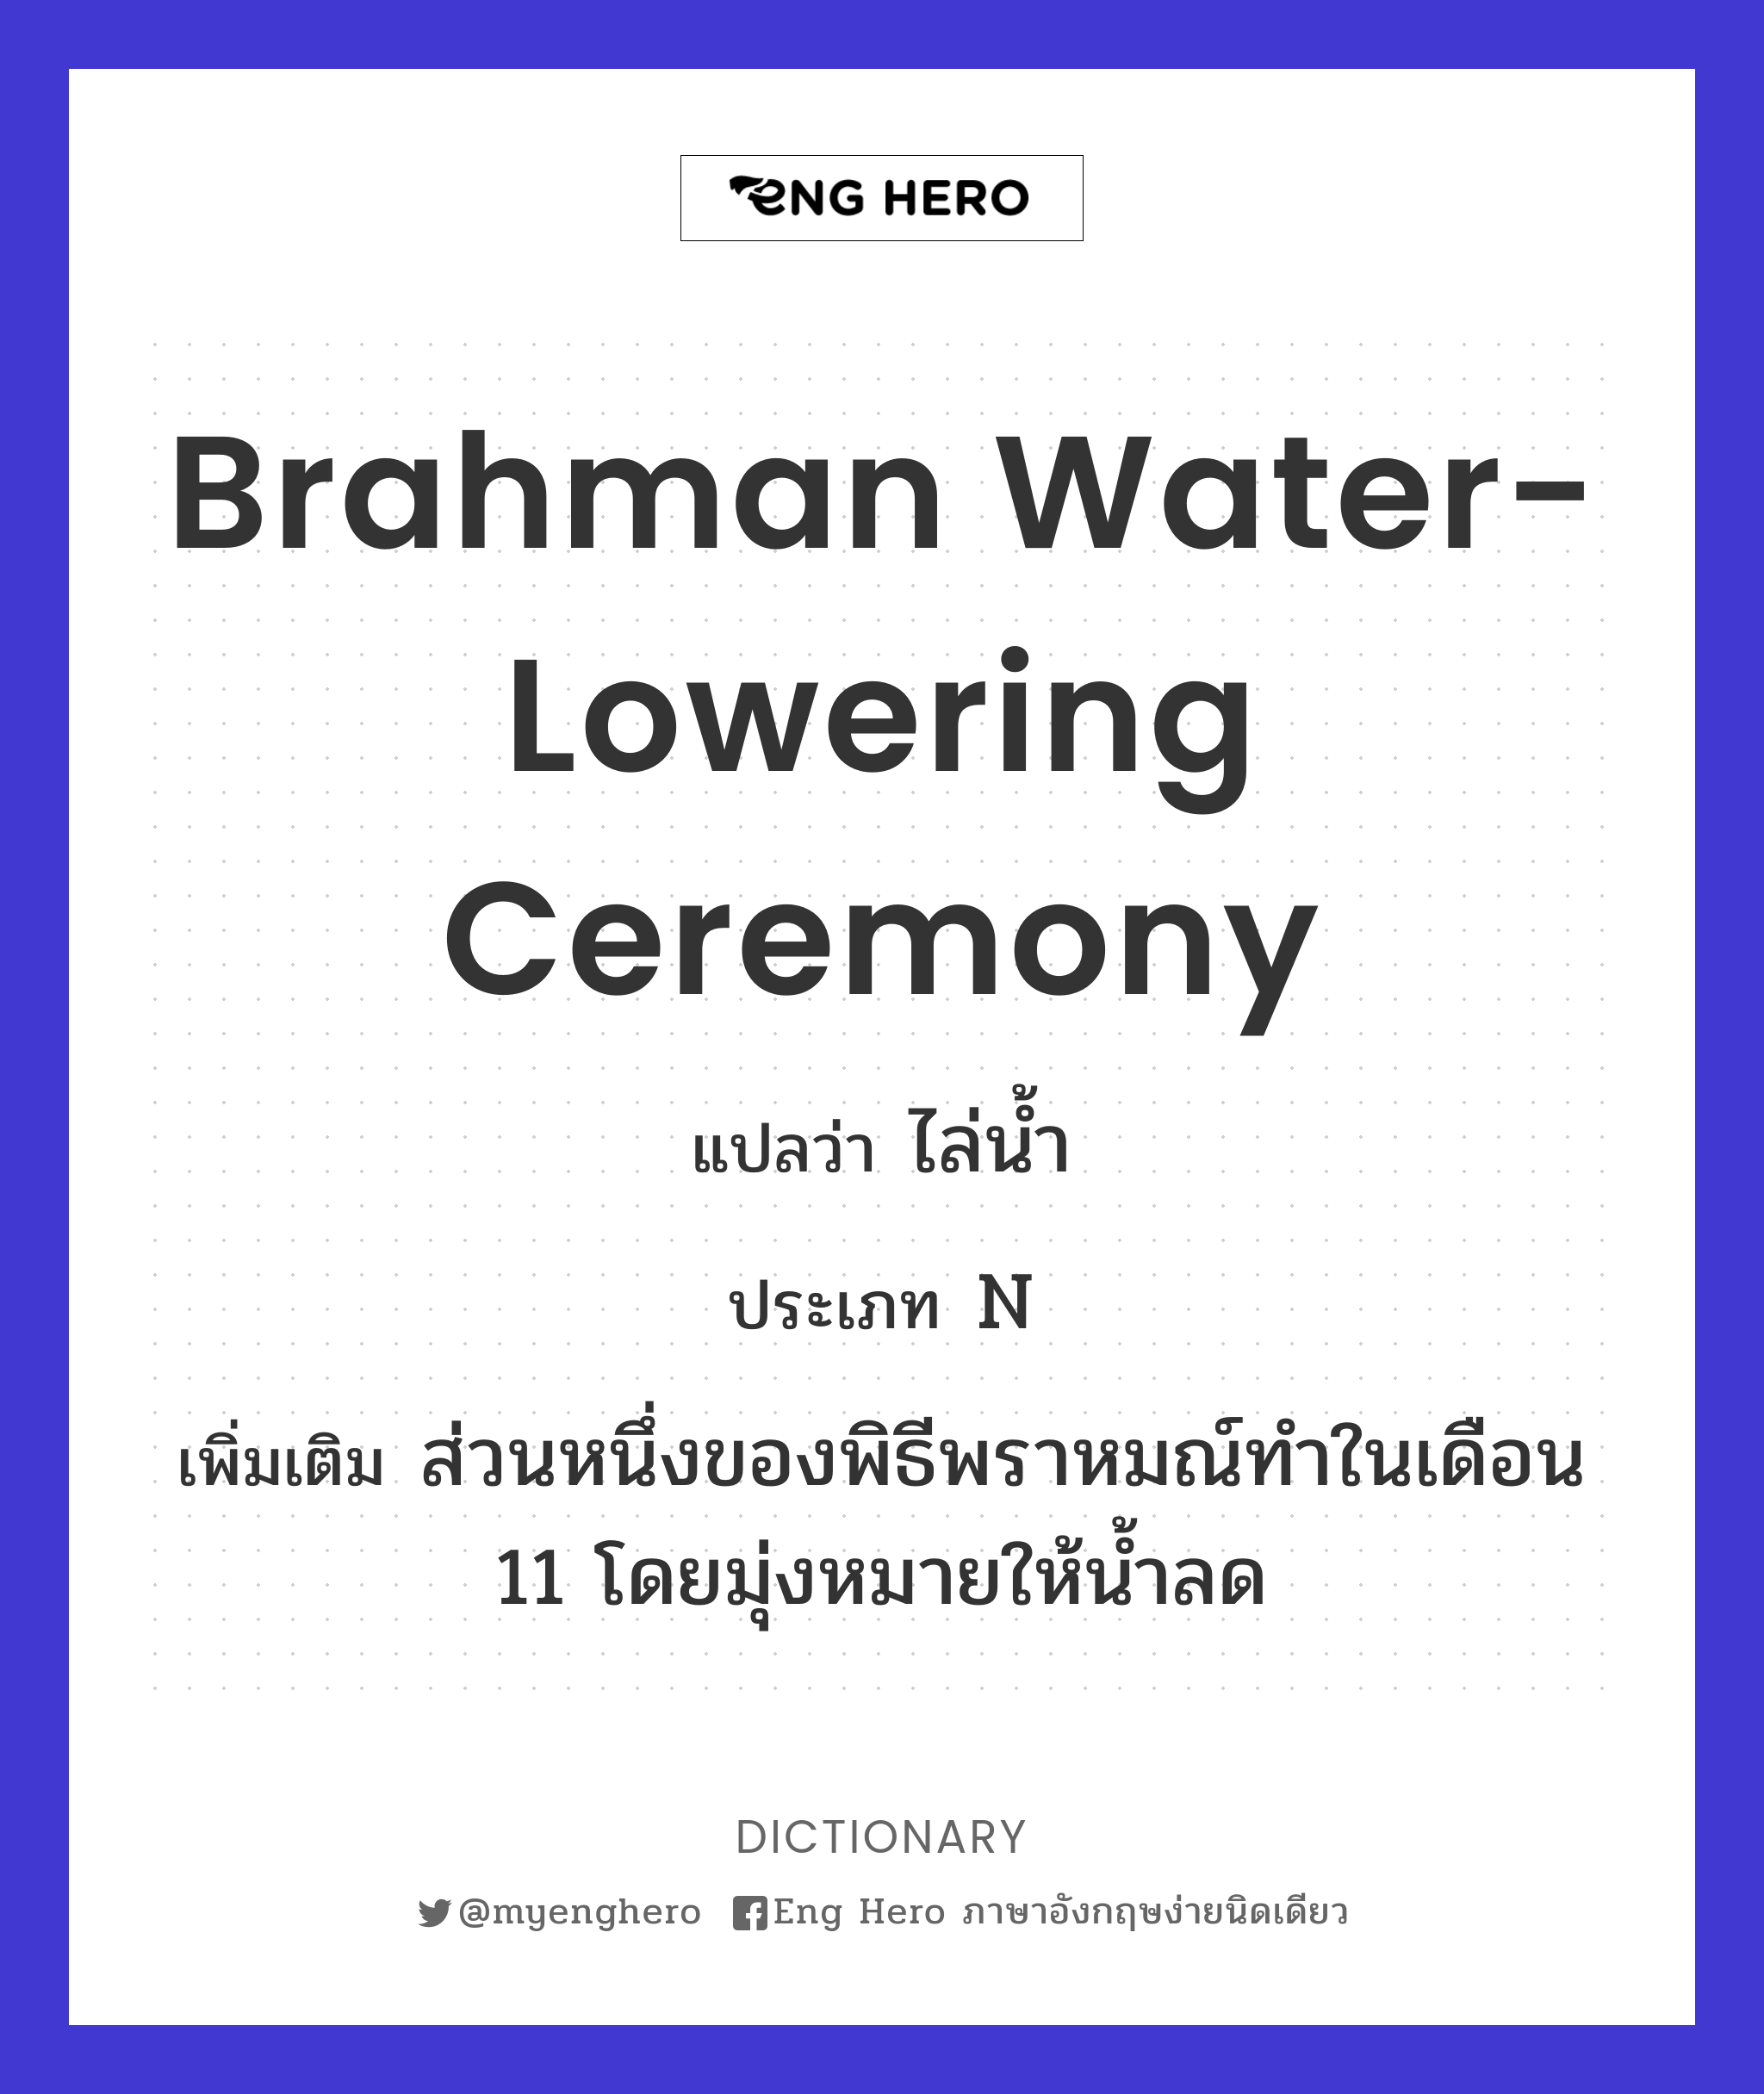 Brahman water-lowering ceremony